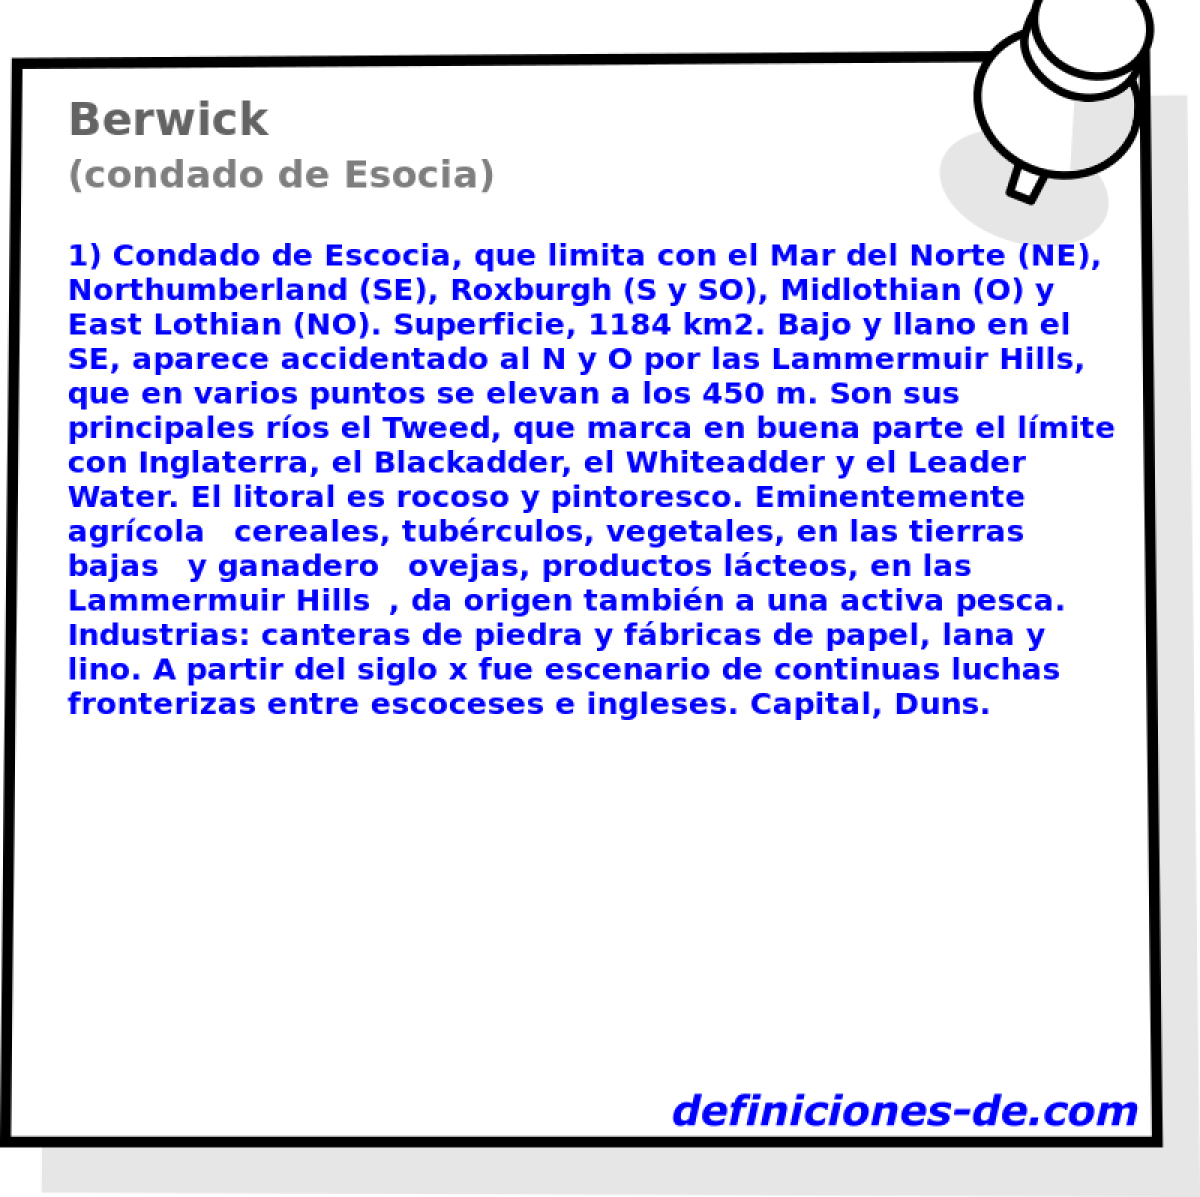 Berwick (condado de Esocia)